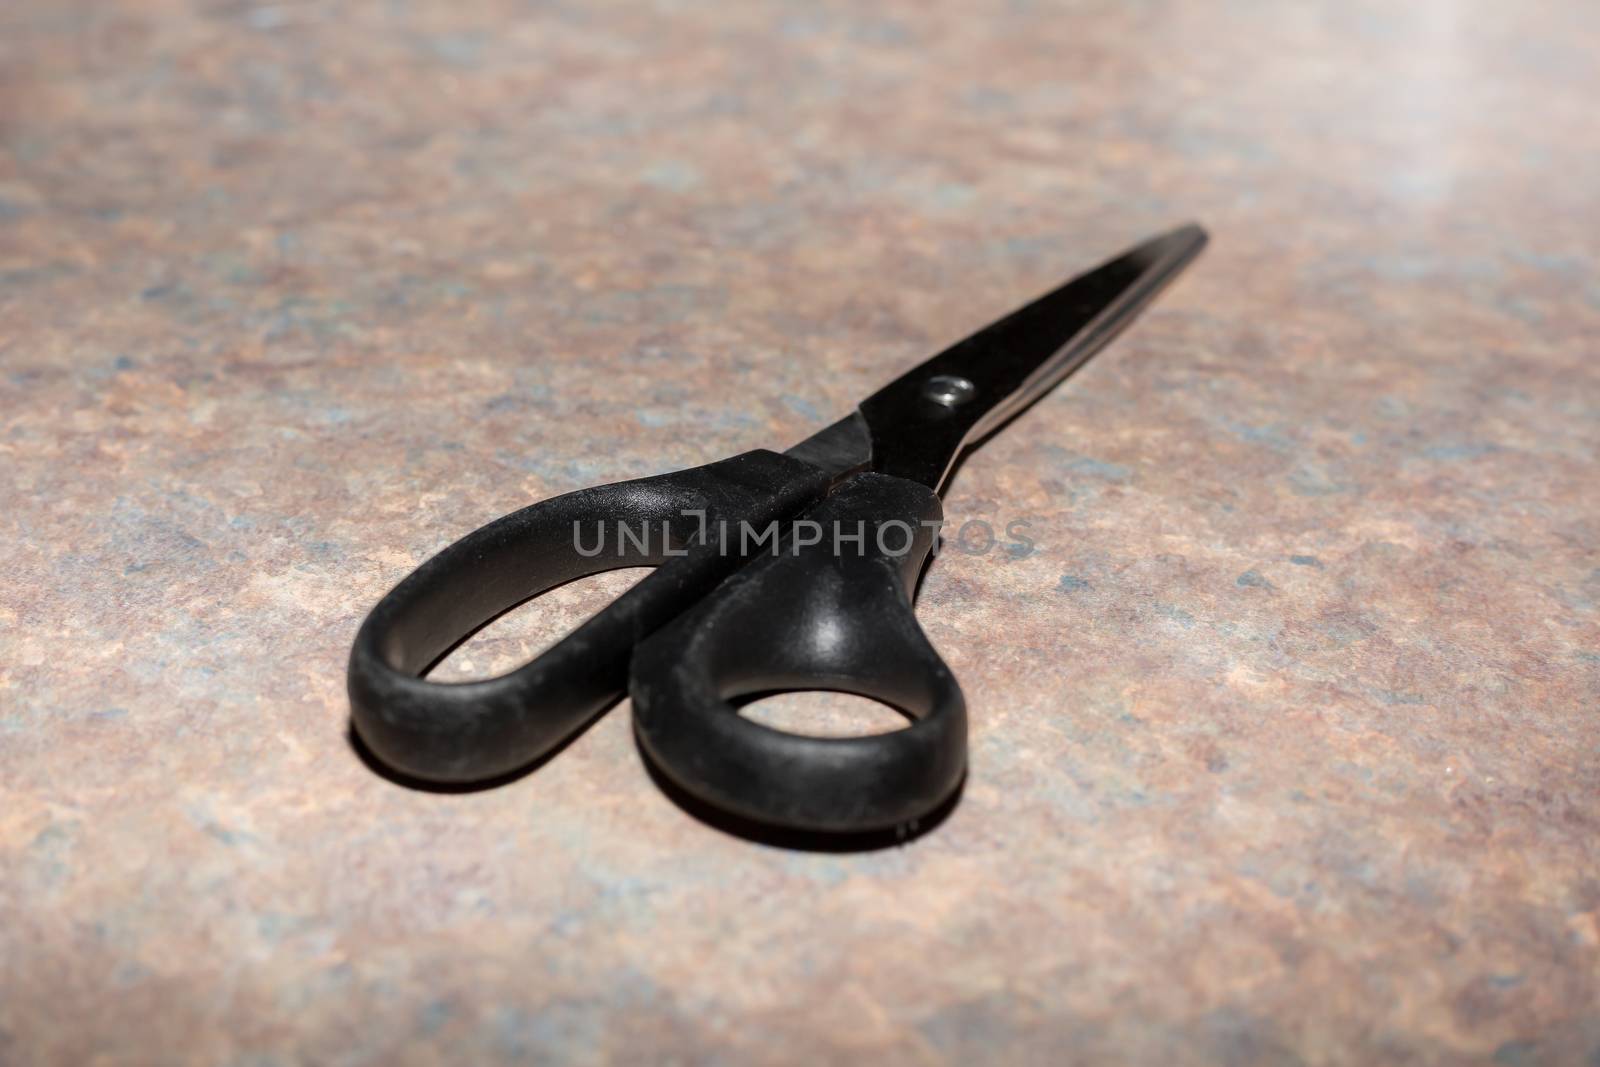 A black pair of scissors lies on the worktop